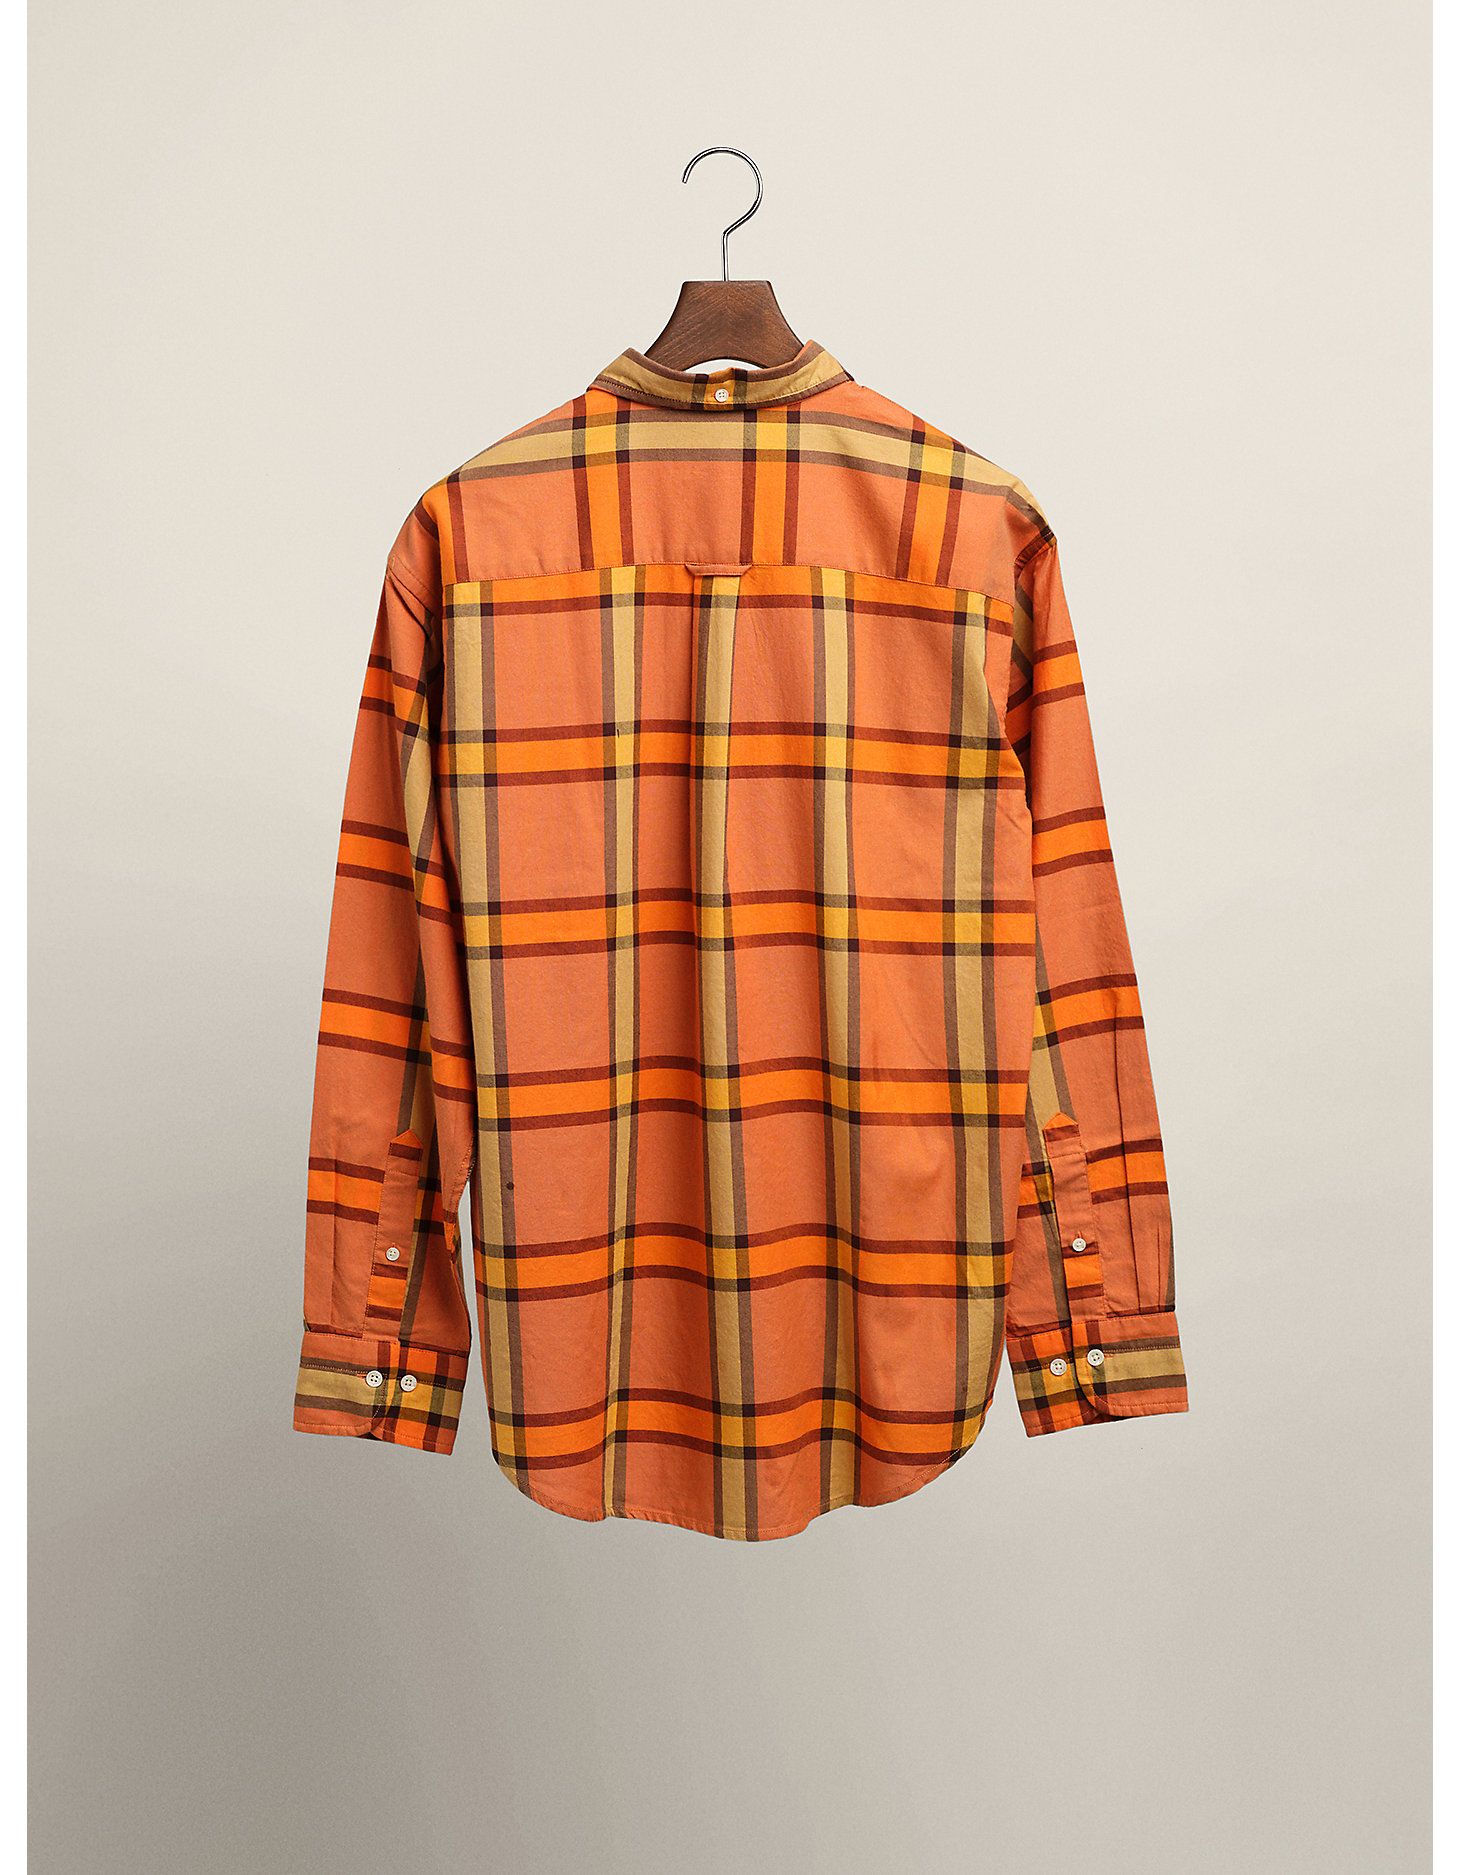 GANT Mens Plaid Oxford Shirt:Russet Orange:XS alternative view 7